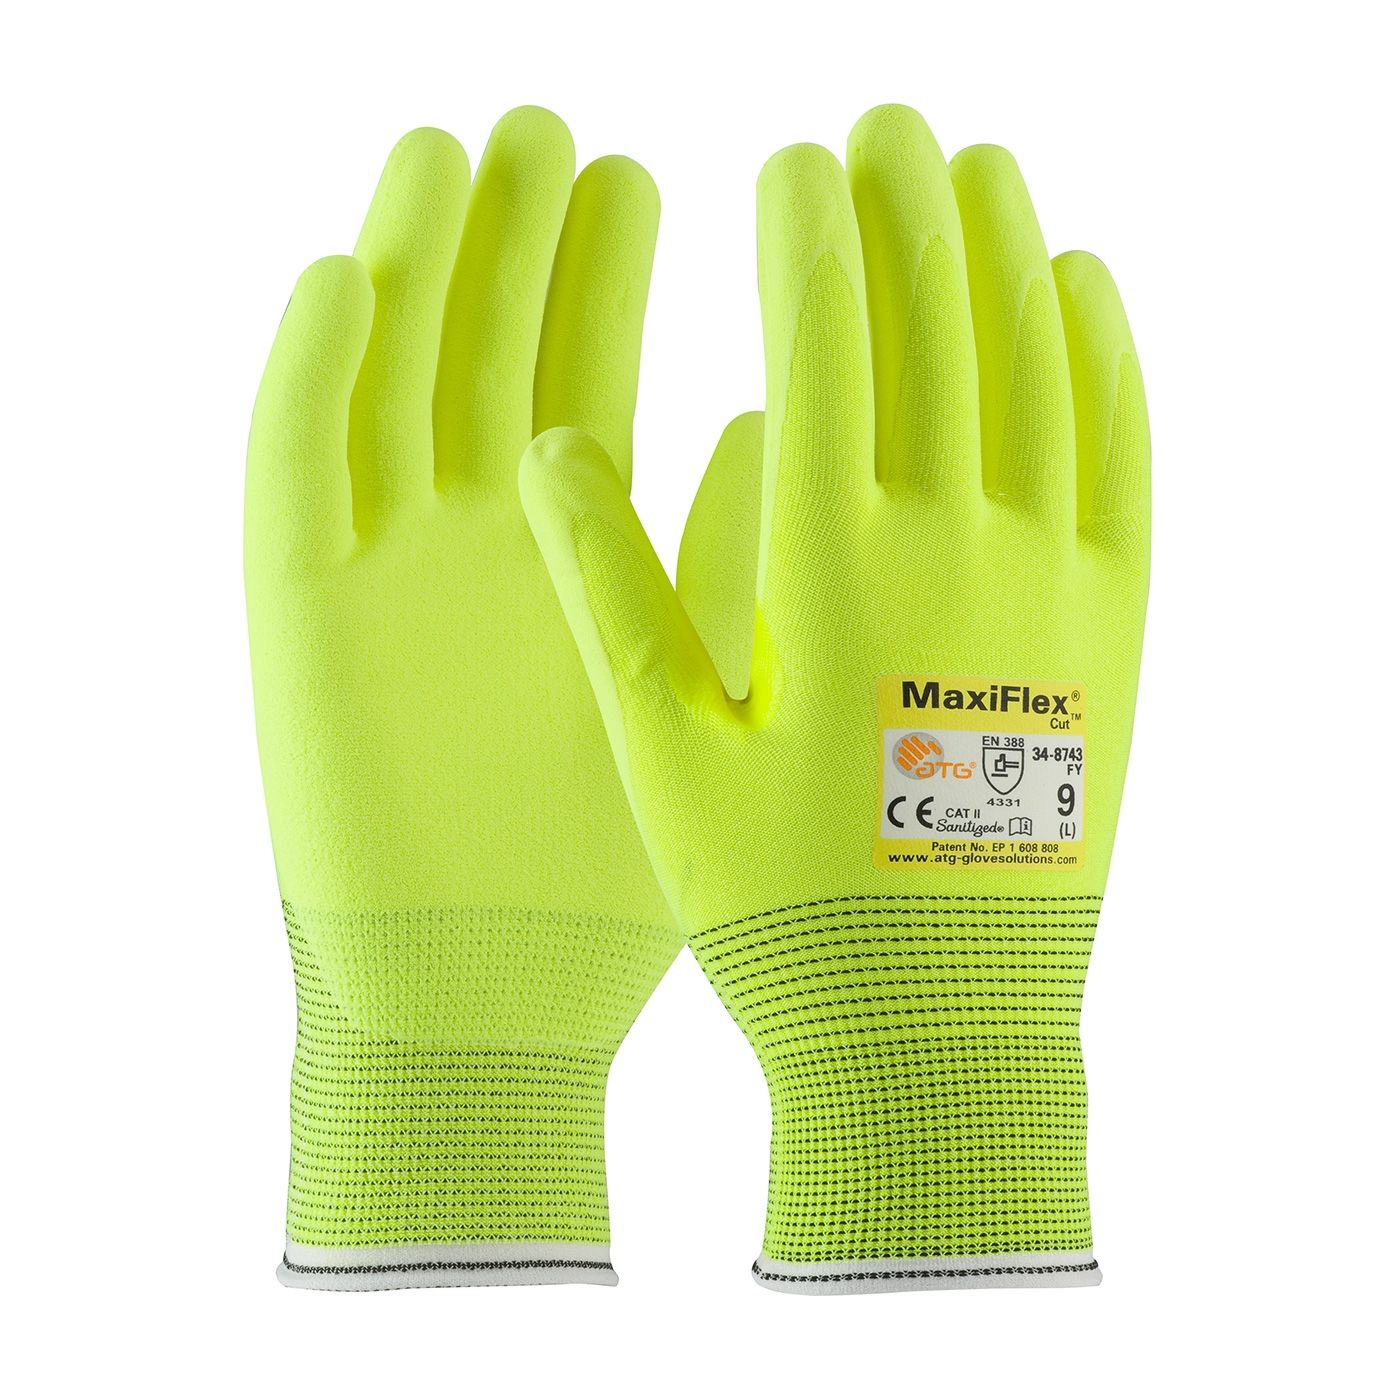 PIP ATG 34-8743FY MaxiFlex Cut Hi-Vis Seamless Knit Glove with Nitrile Coated MicroFoam Grip, Hi Vis Yellow, Box of 12